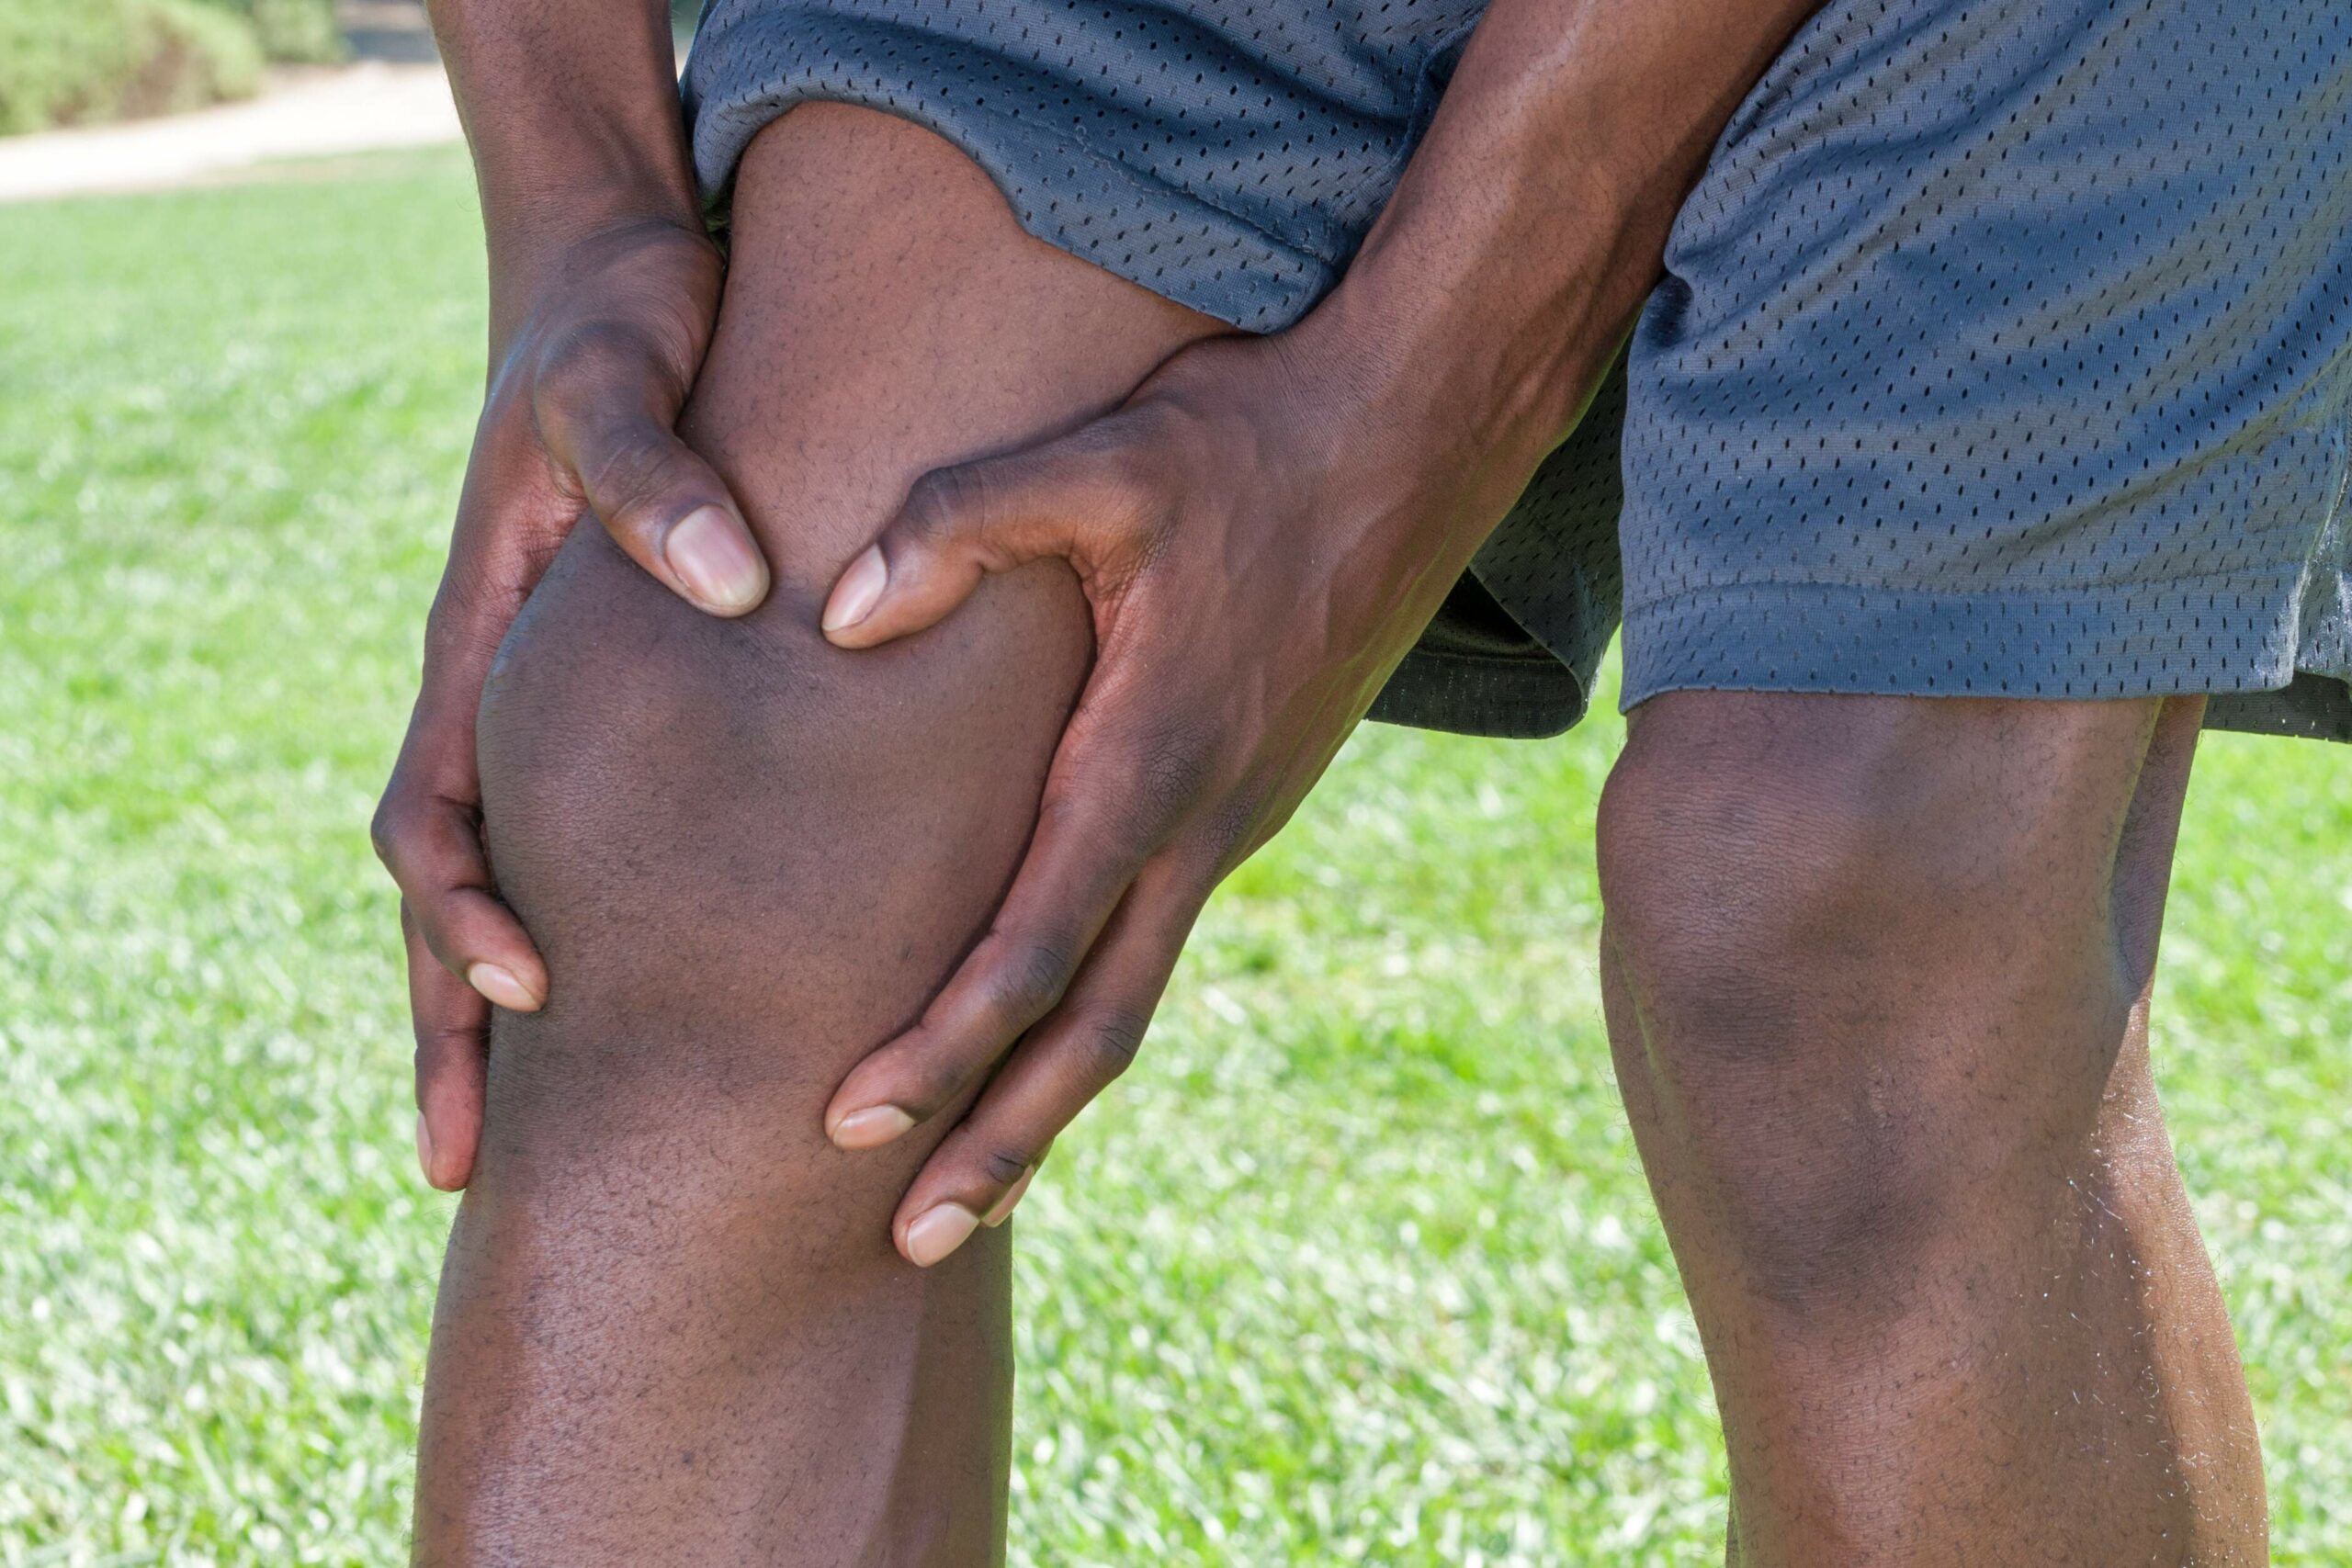 Athlete Inspecting Knee Pain